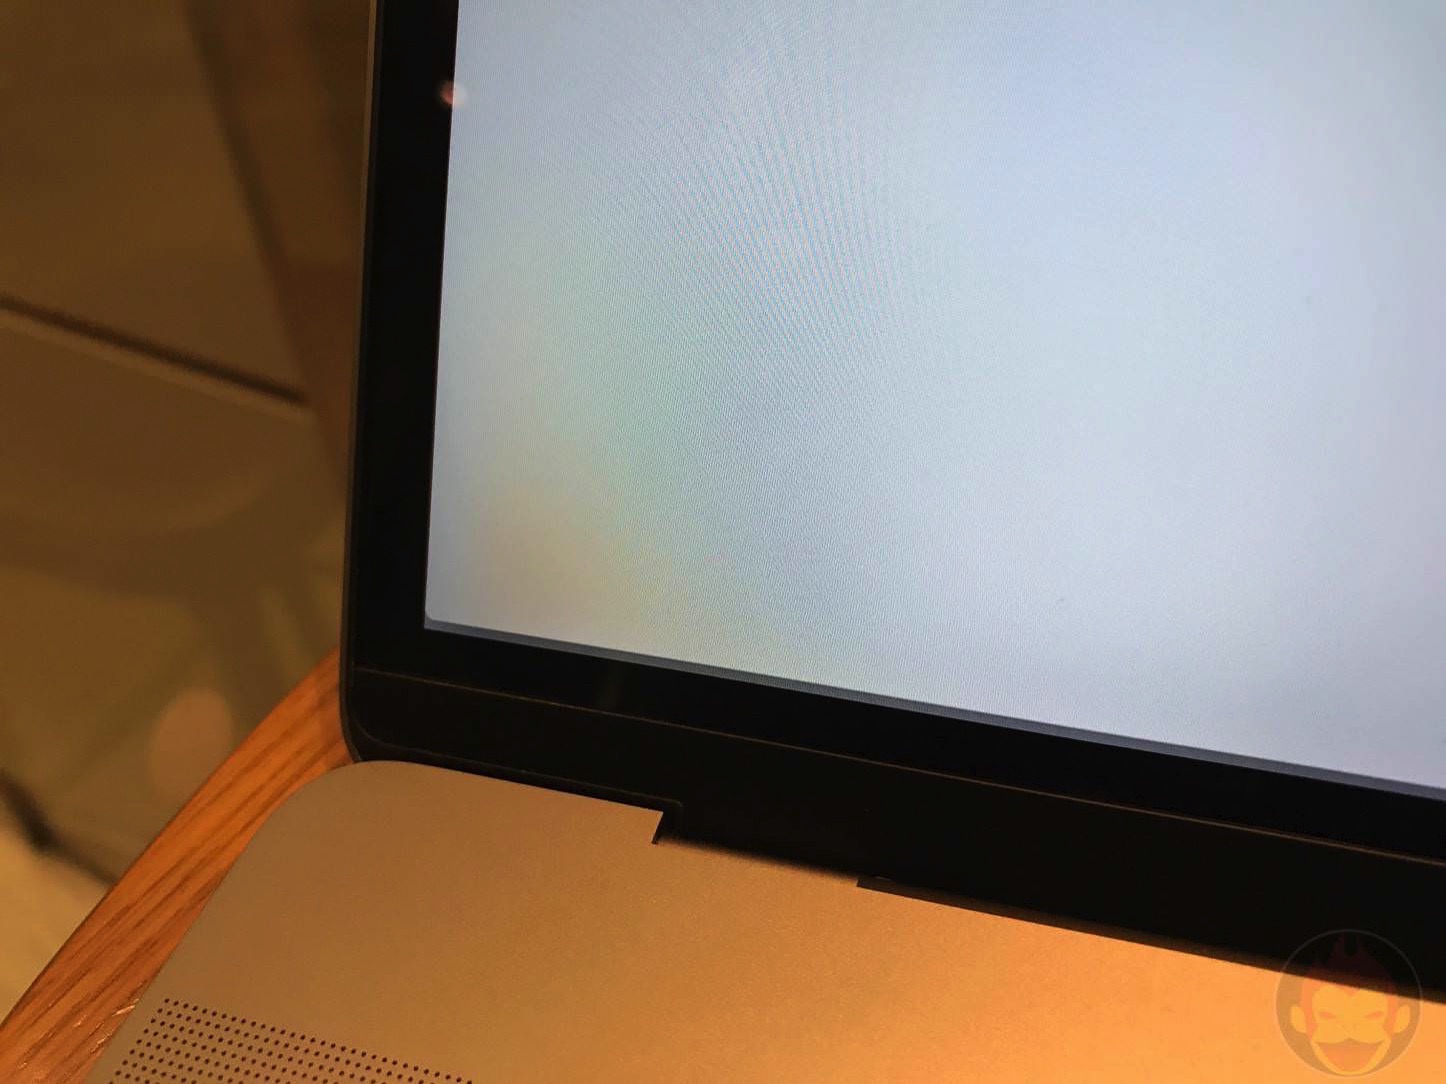 MacBook-Pro-2016-suffering-from-display-smear-03.jpg